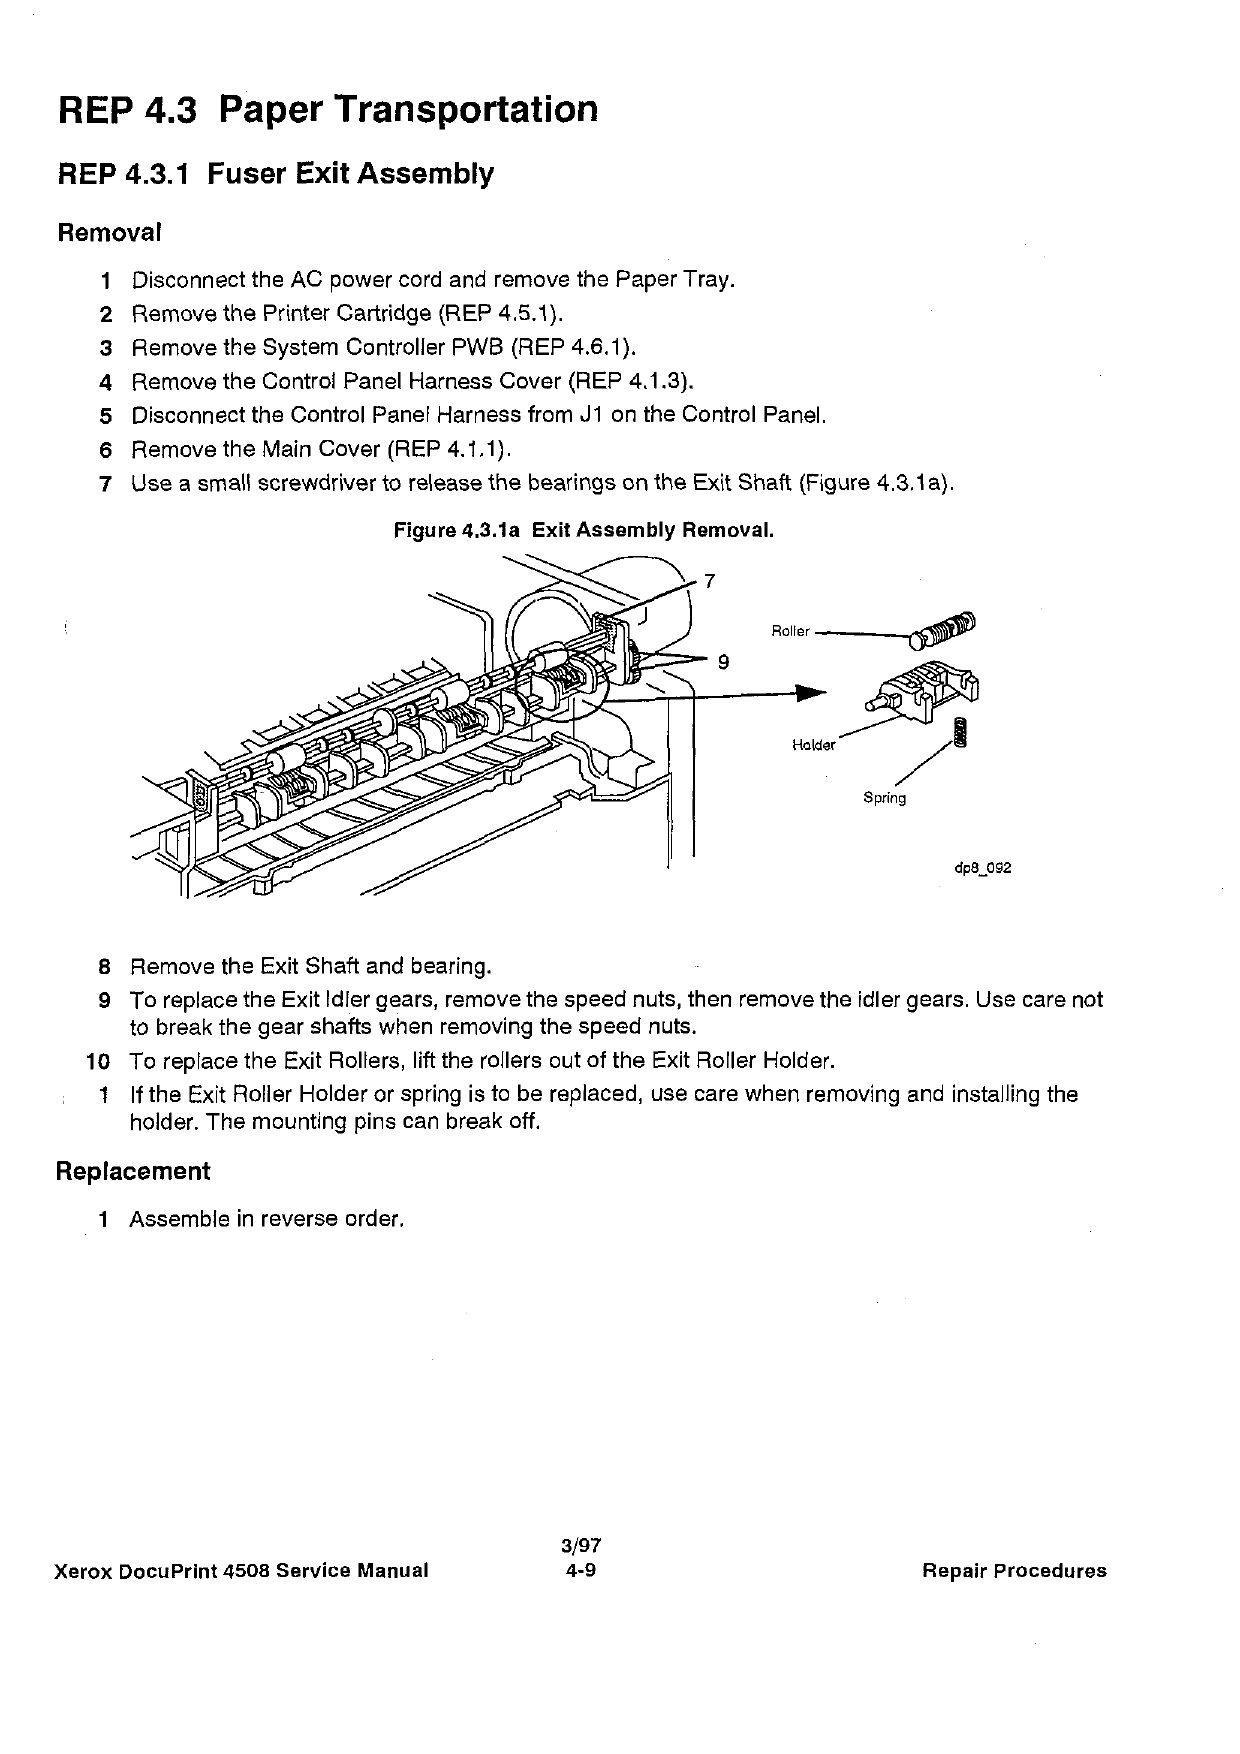 Xerox DocuPrint 4508 Parts List and Service Manual-3